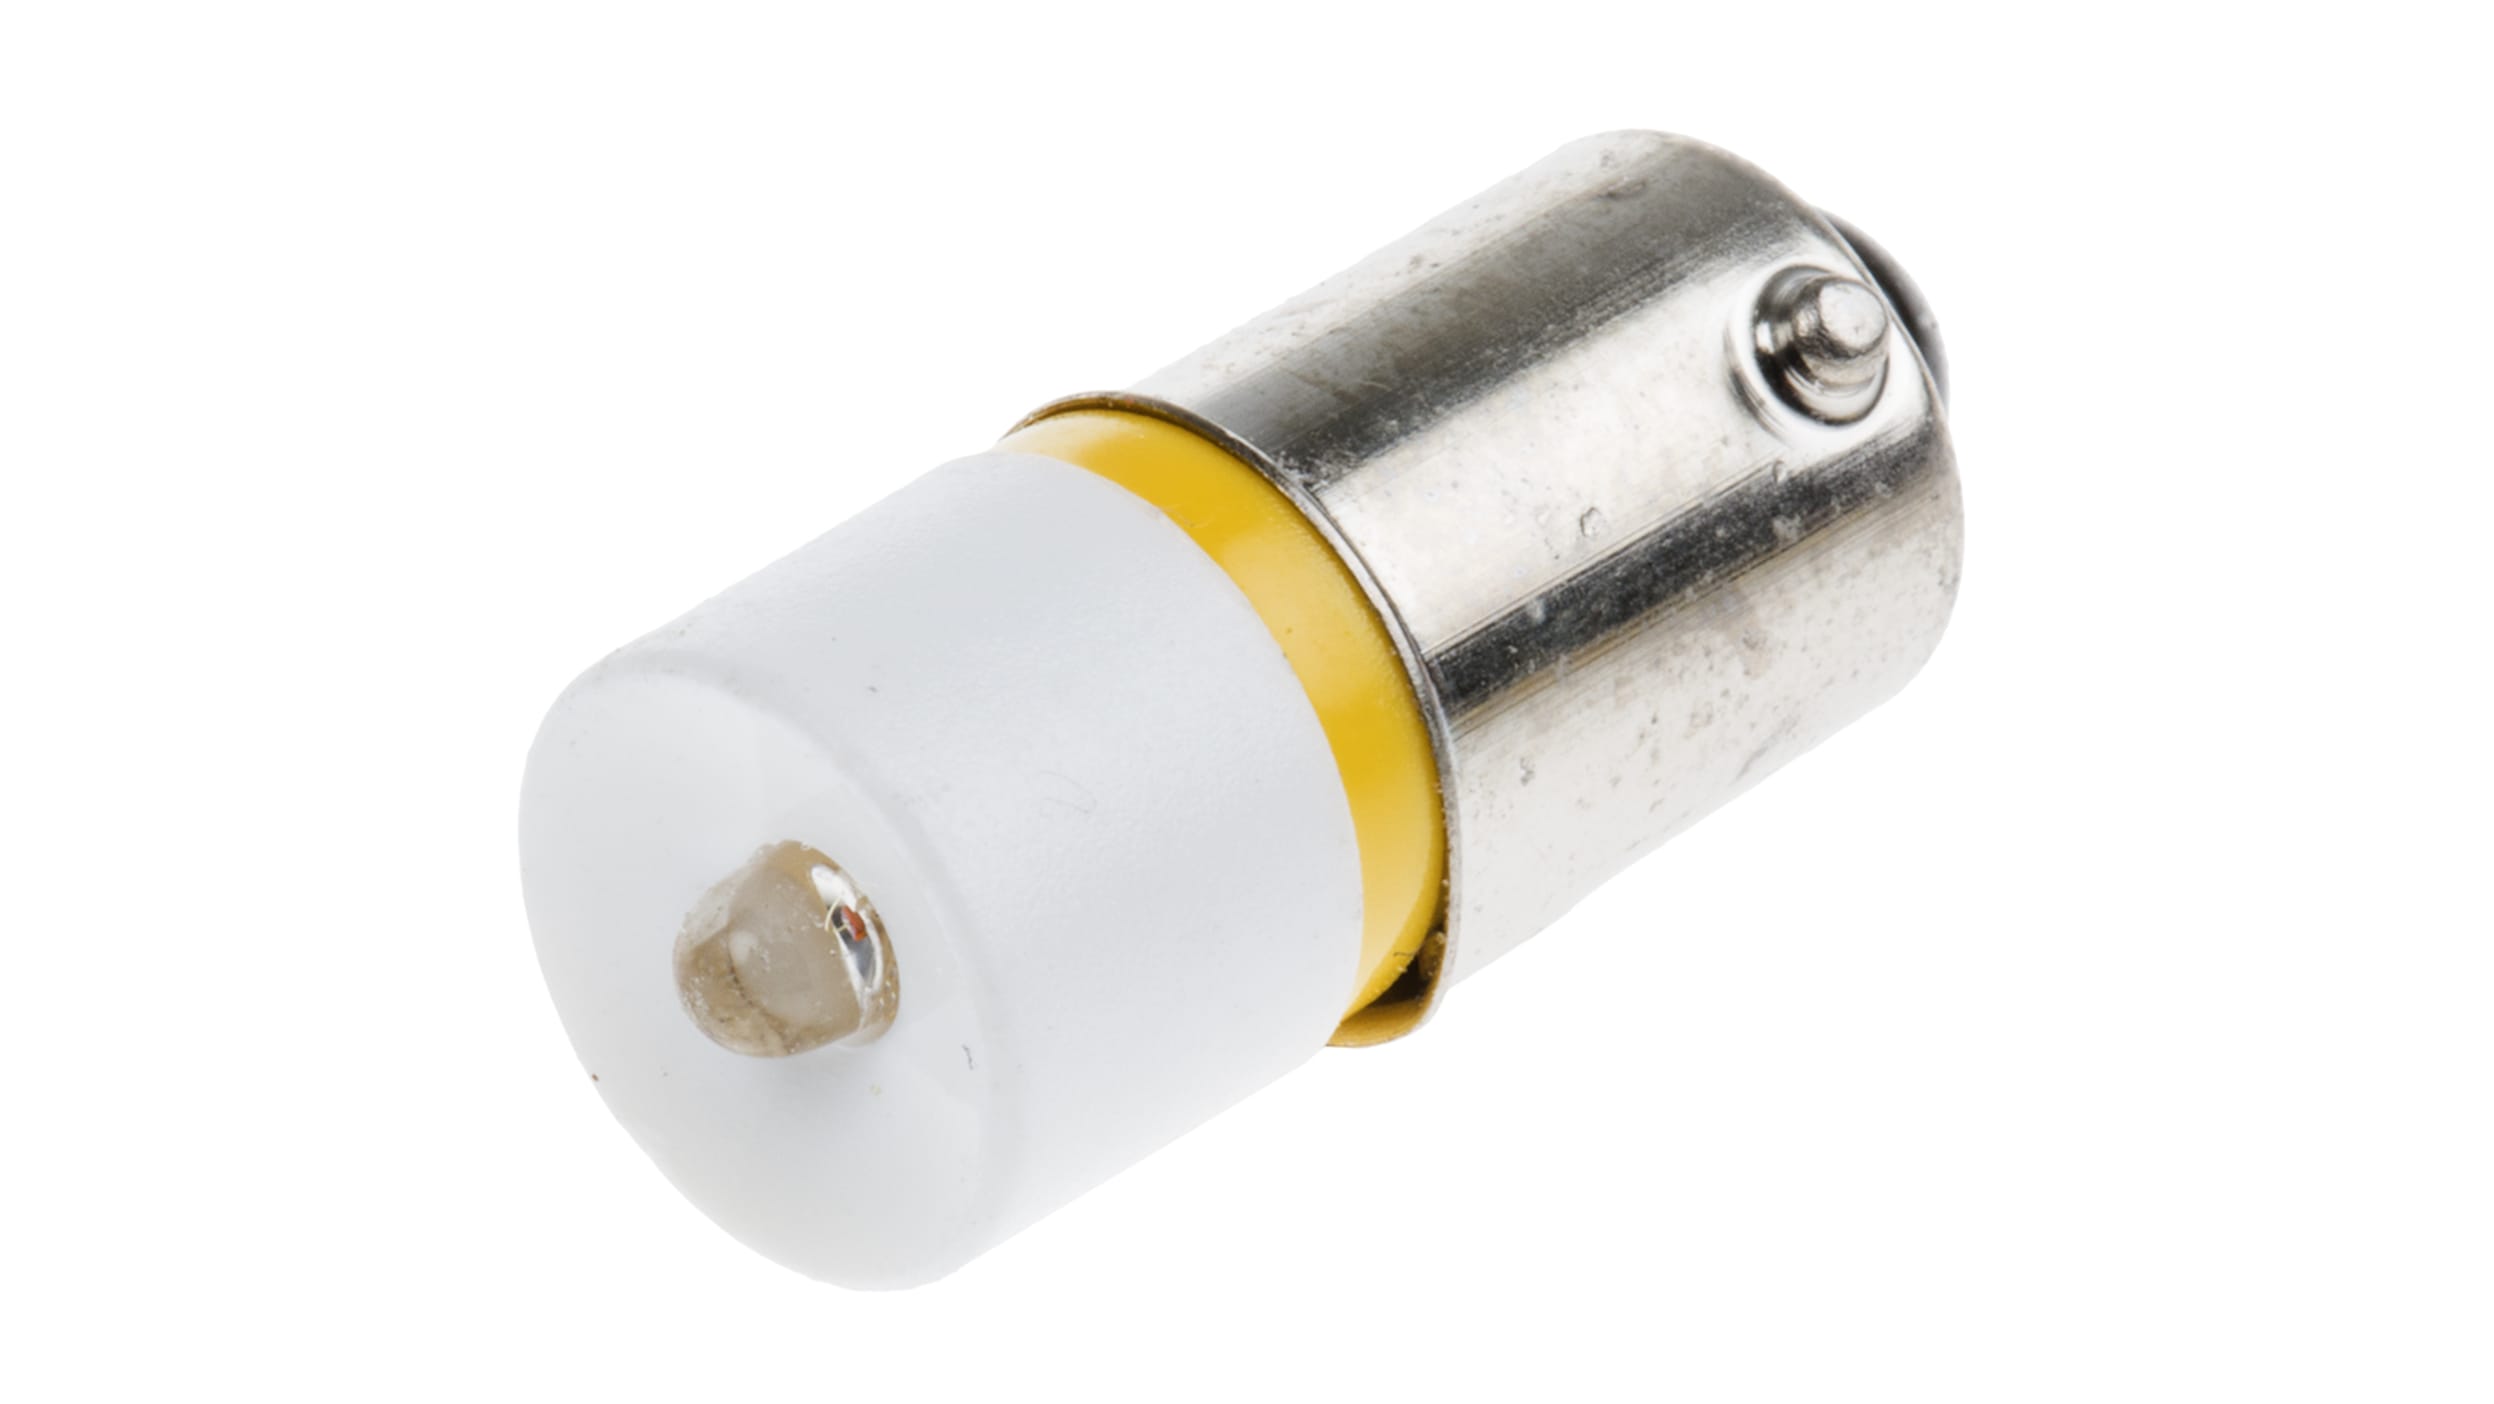 RS PRO LED Signalleuchte Gelb, 230V ac / 135mcd, Ø 10mm x 24mm, Sockel BA9s